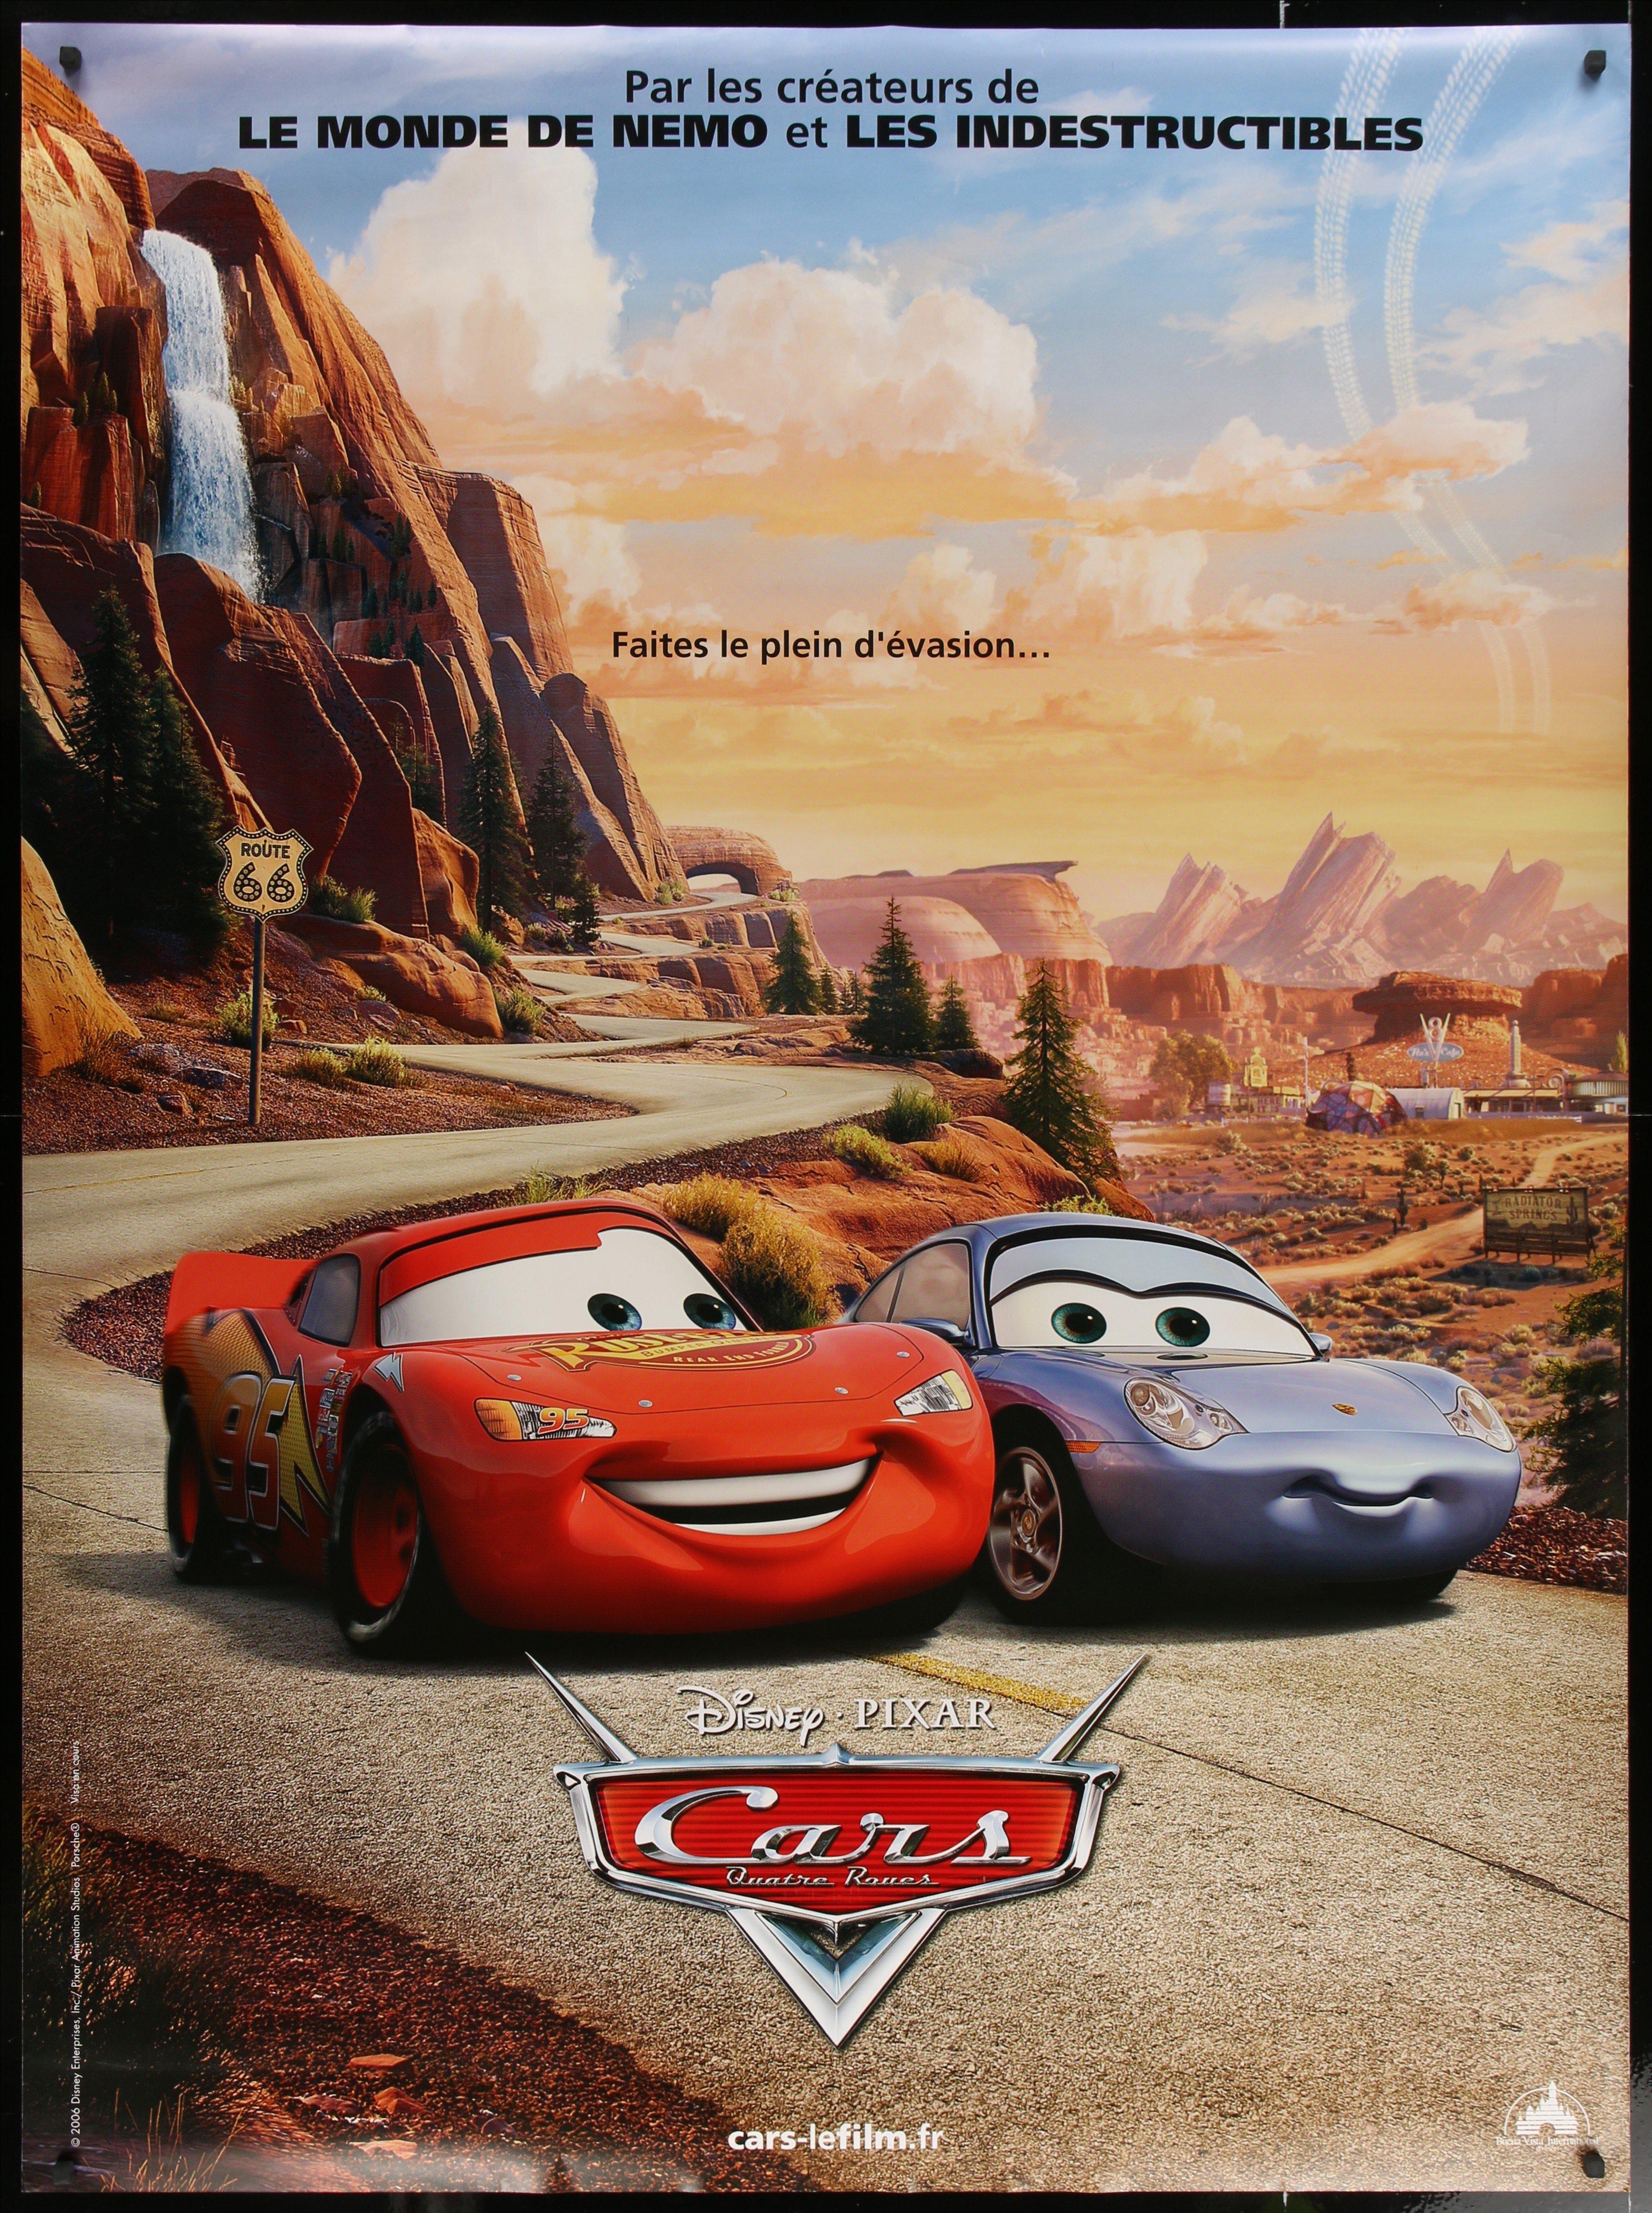 cars 1 movie